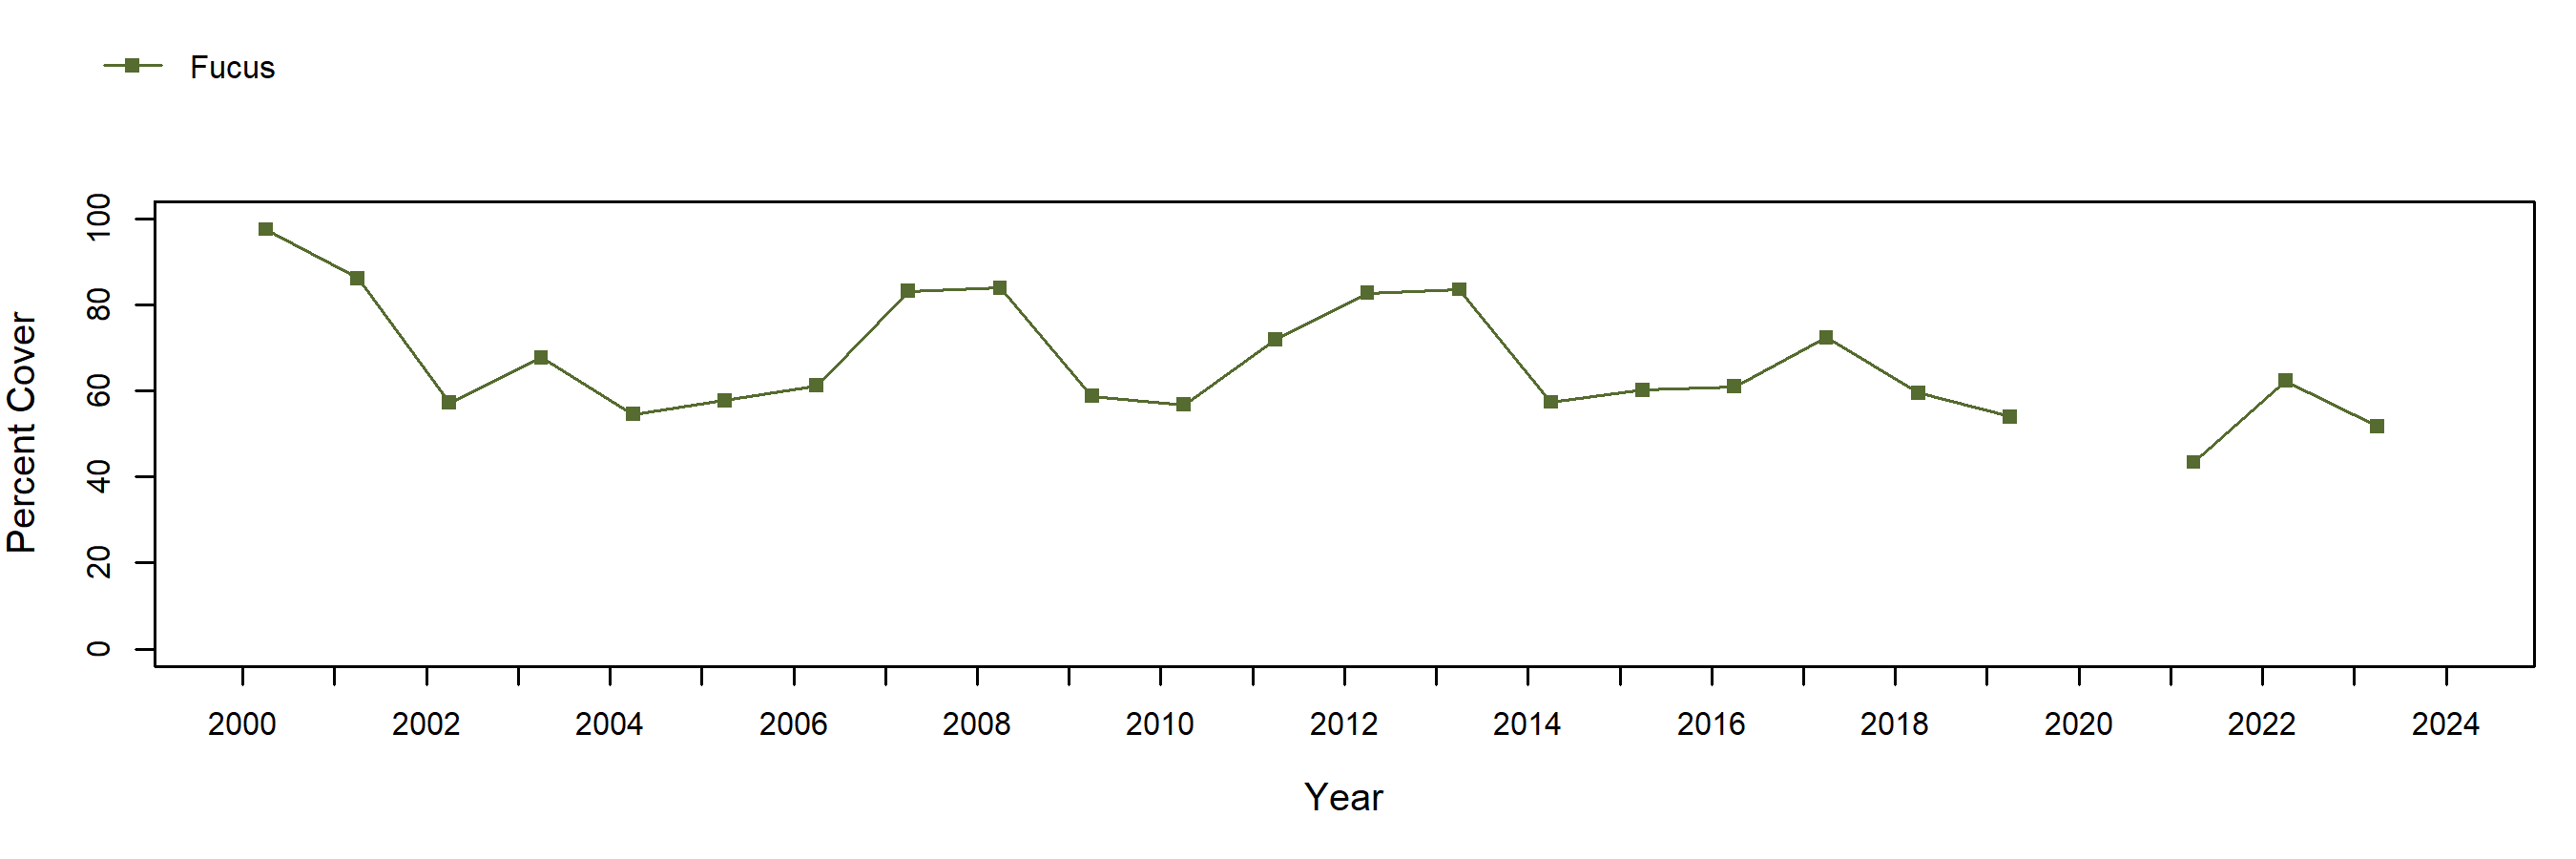 Fogarty Creek Fucus trend plot